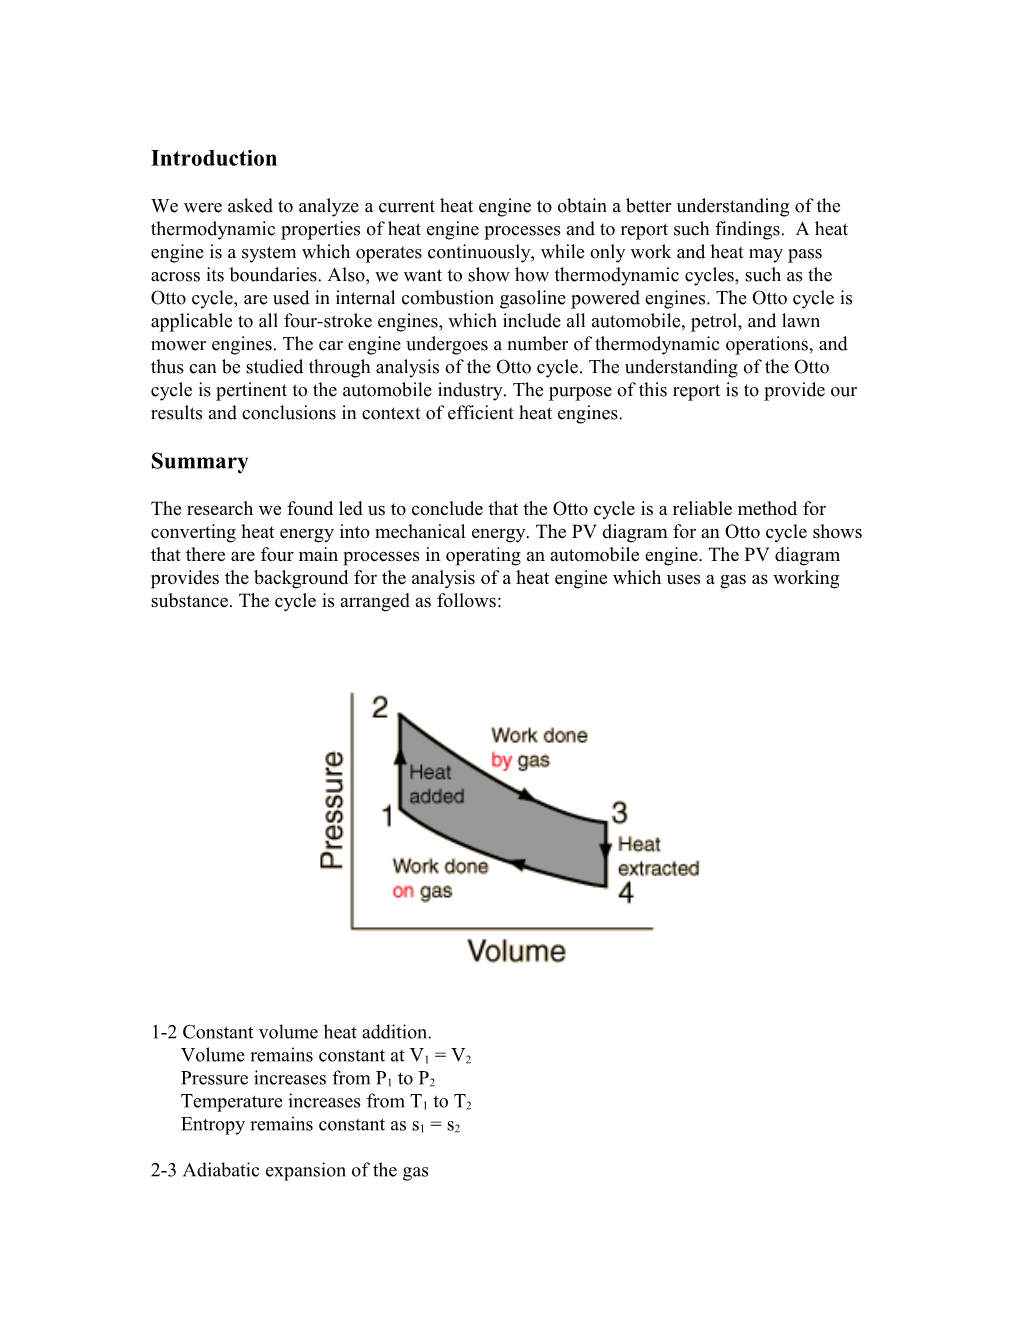 1-2 Constant Volume Heat Addition